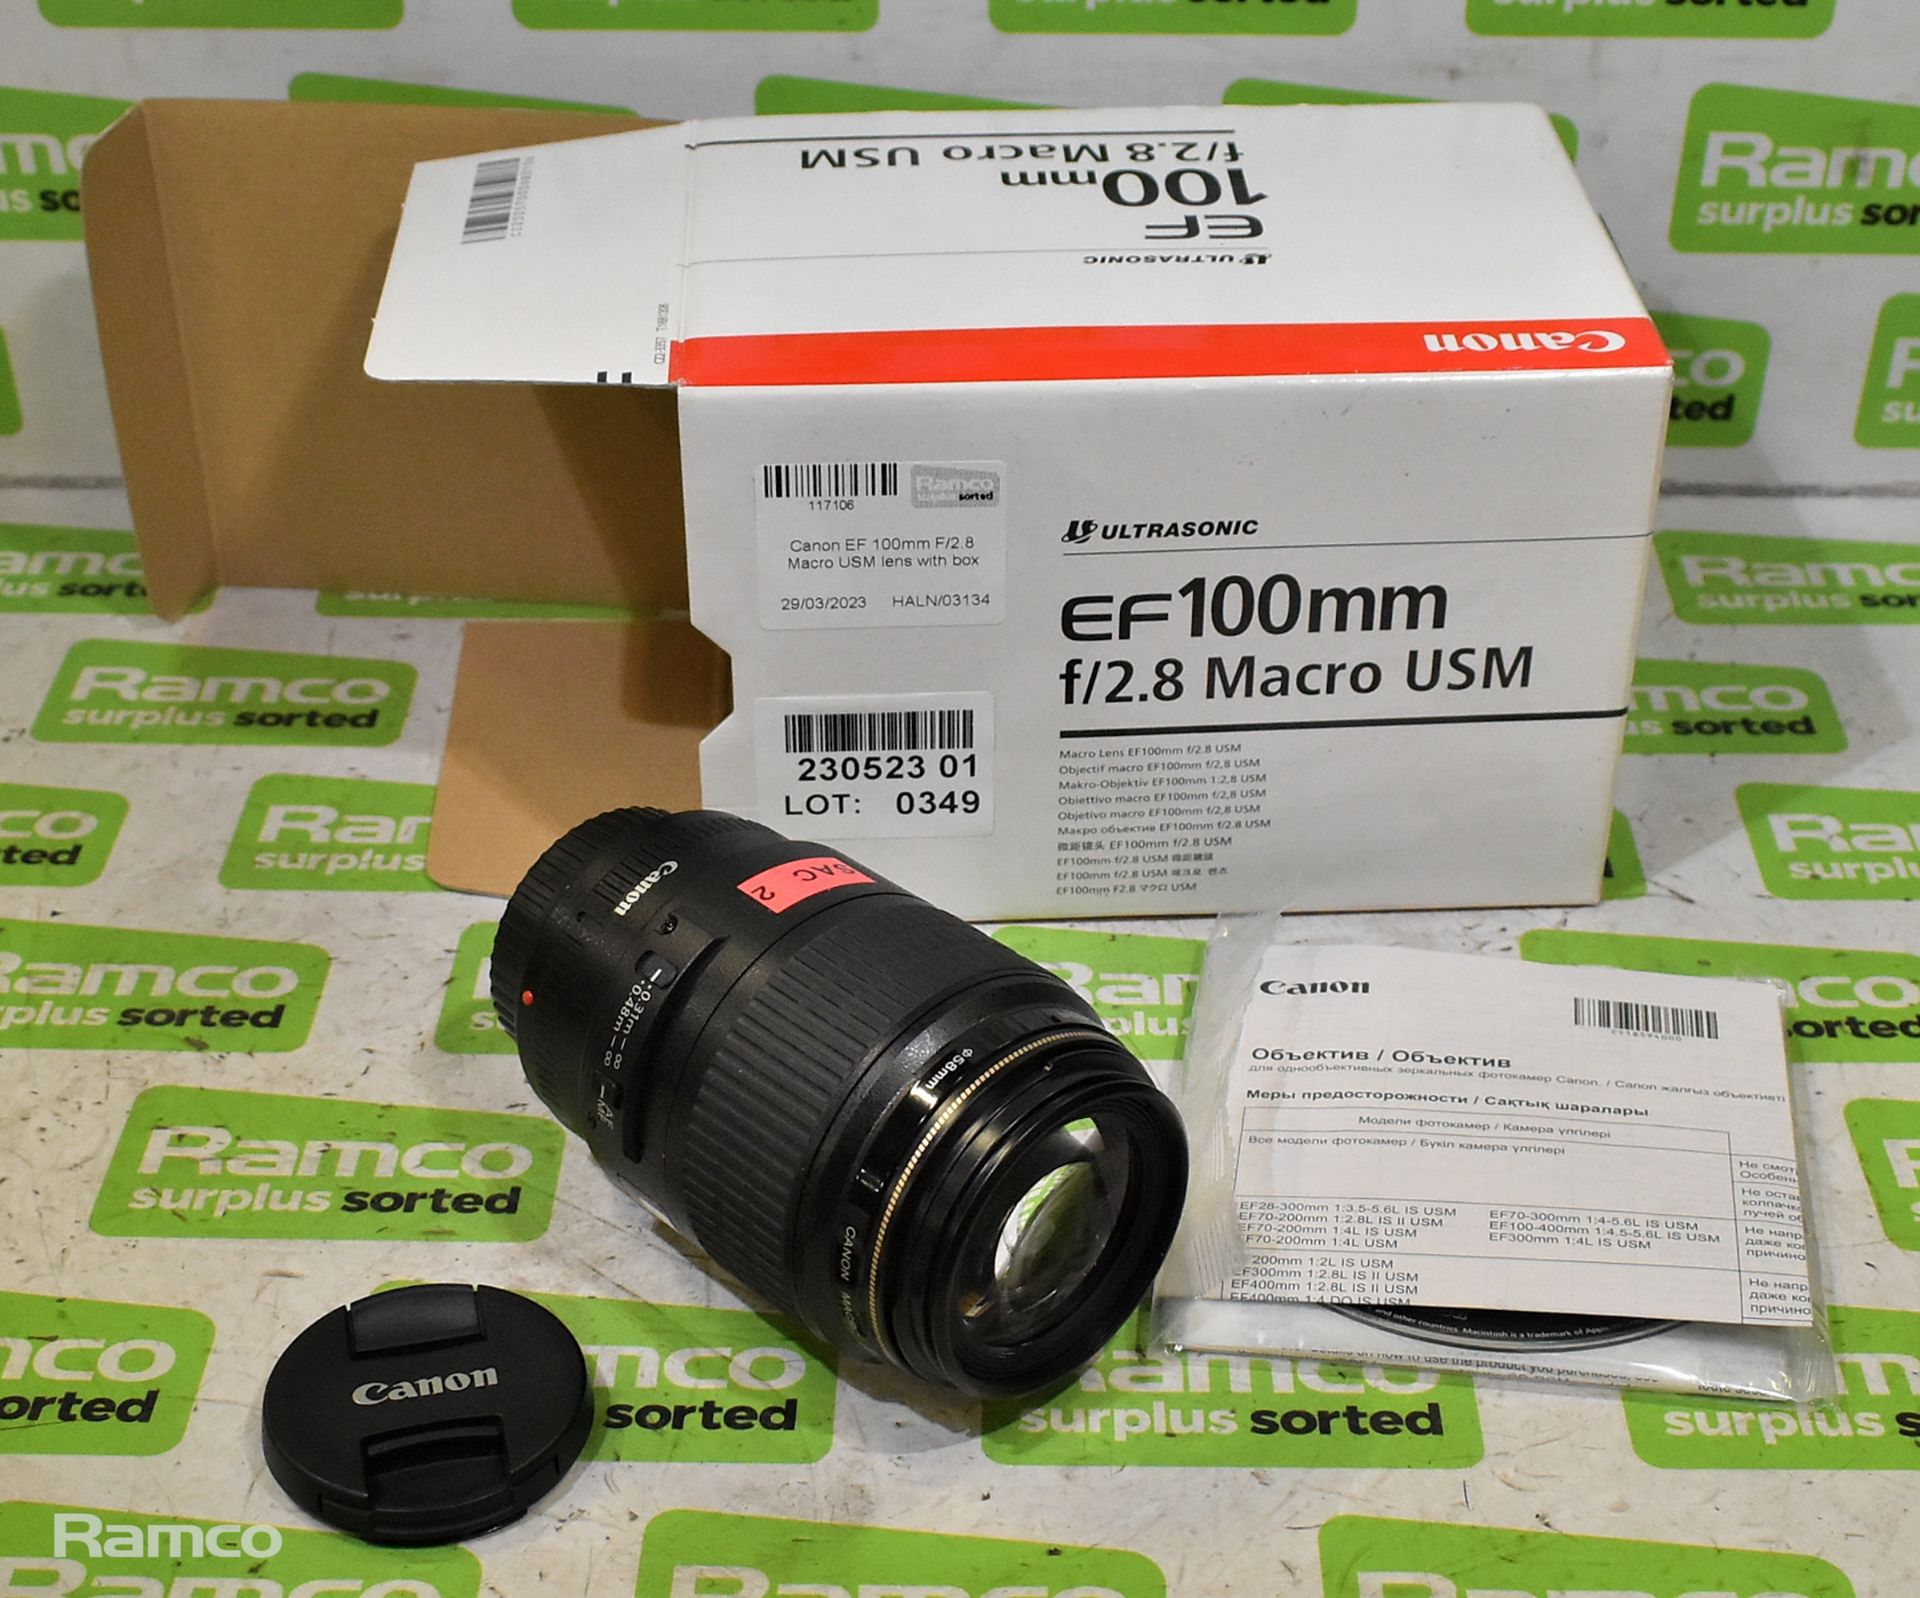 Canon EF 100mm F/2.8 Macro USM lens with box